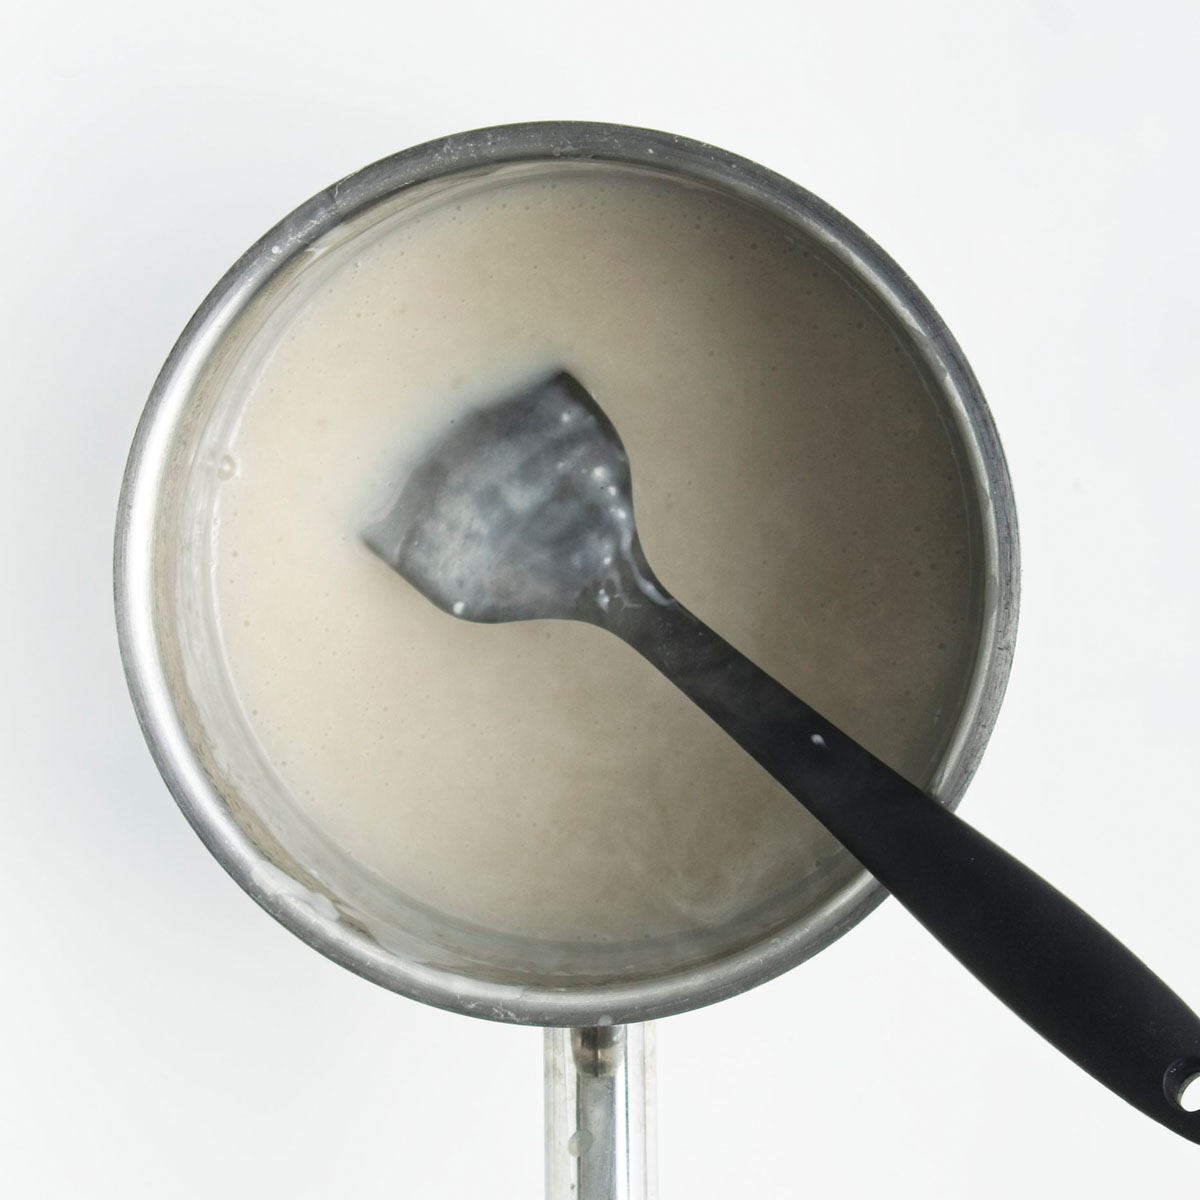 Saucepan with white liquid and a spatula